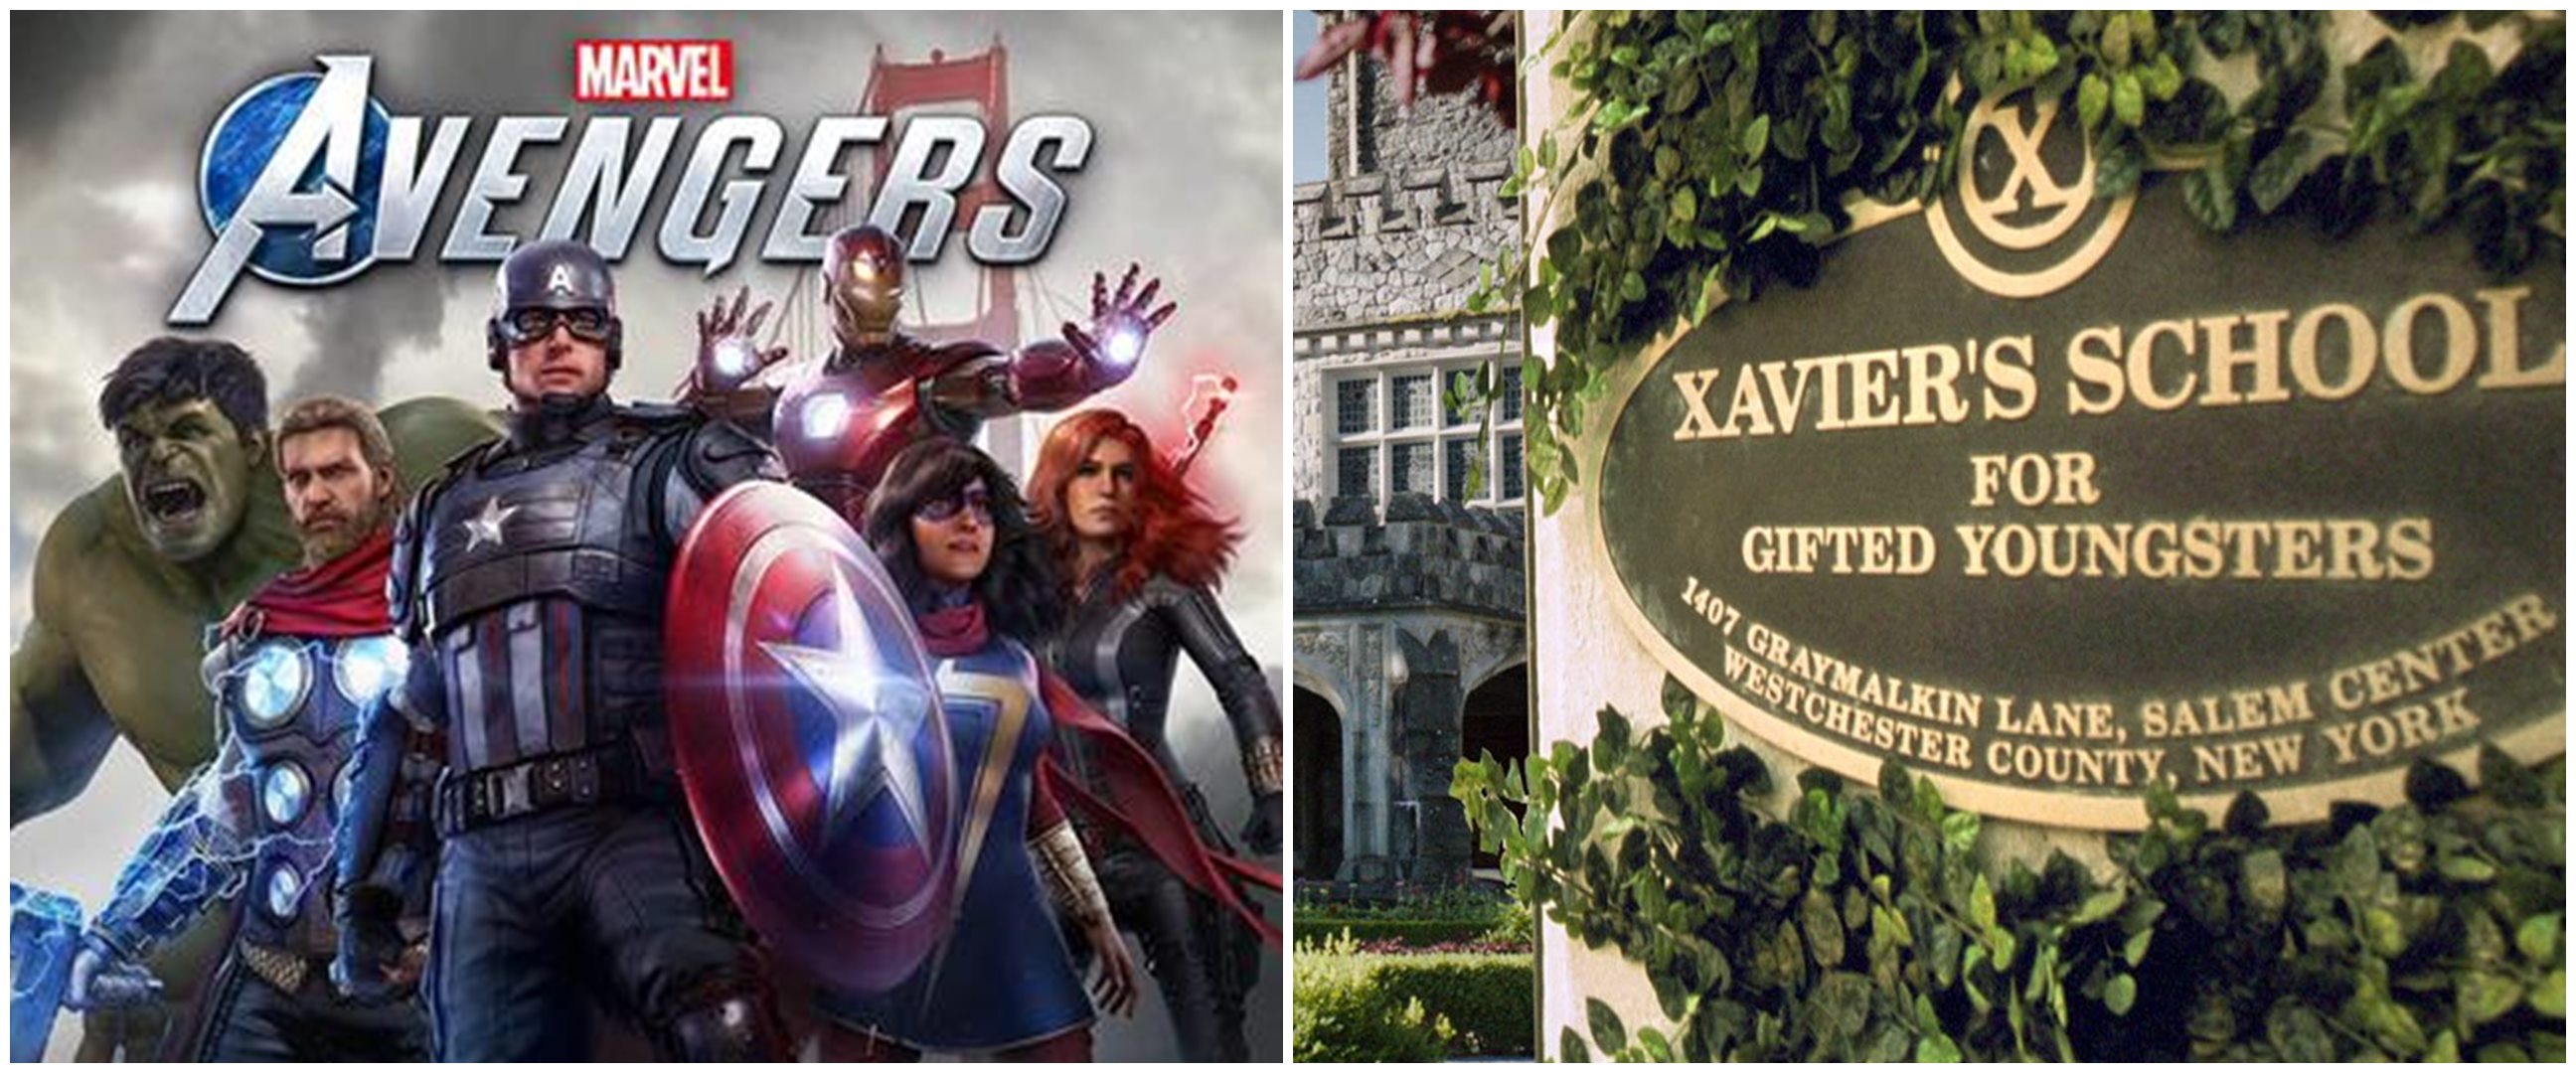 9 Sekolah superhero, Avengers Academy ubah penjahat jadi pahlawan